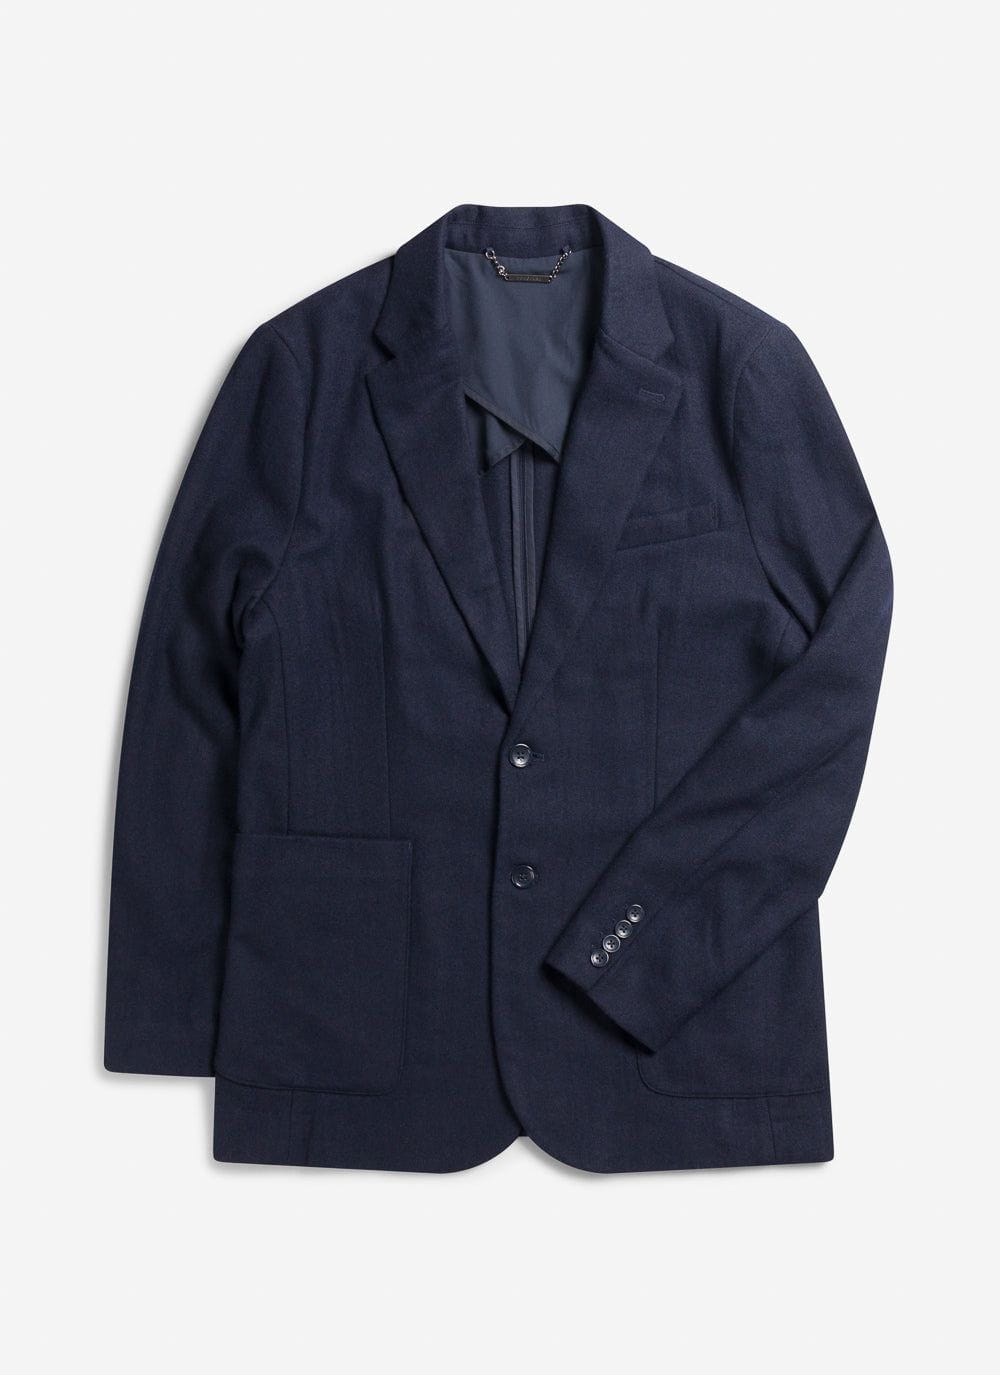 Men's Tailored Suit Jacket | Wool | Navy Blue